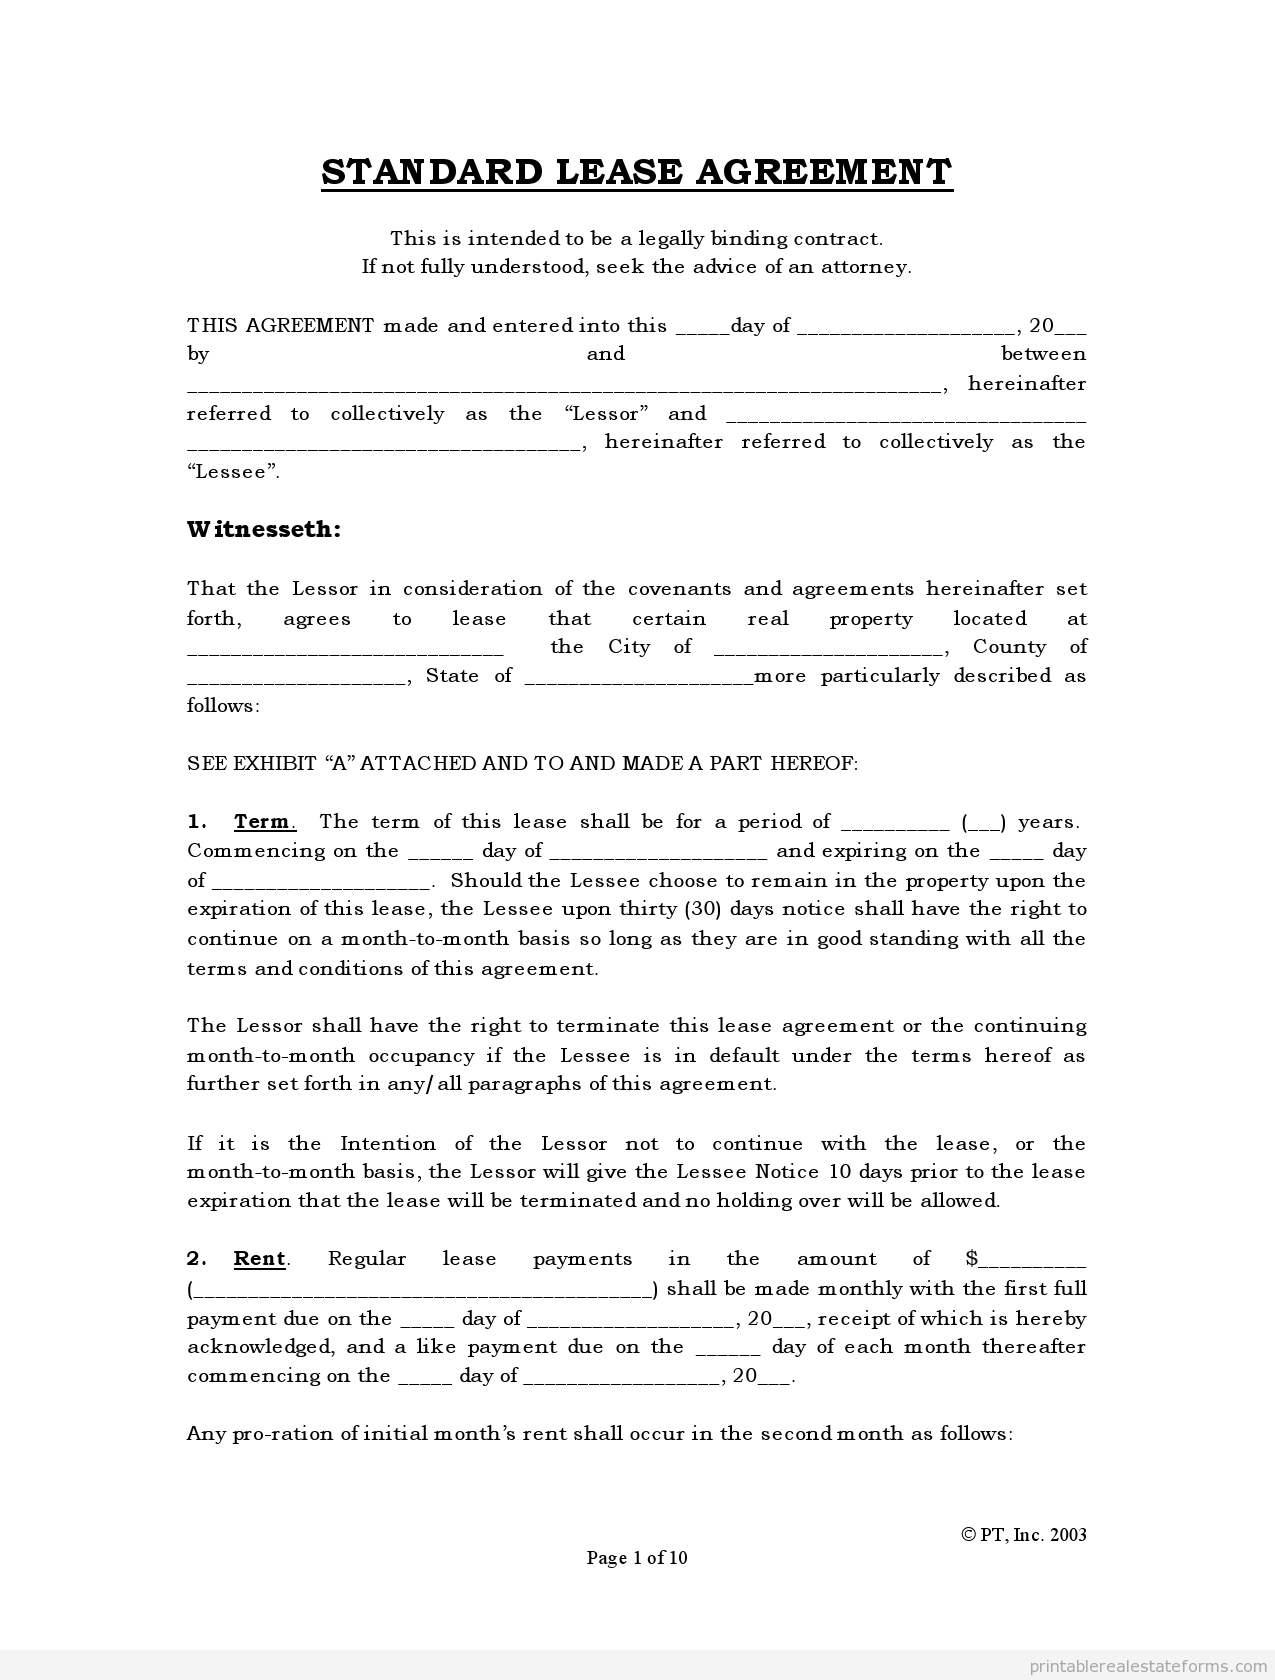 Free Rental Agreements To Print | Free Standard Lease Agreement Form - Free Printable Basic Rental Agreement